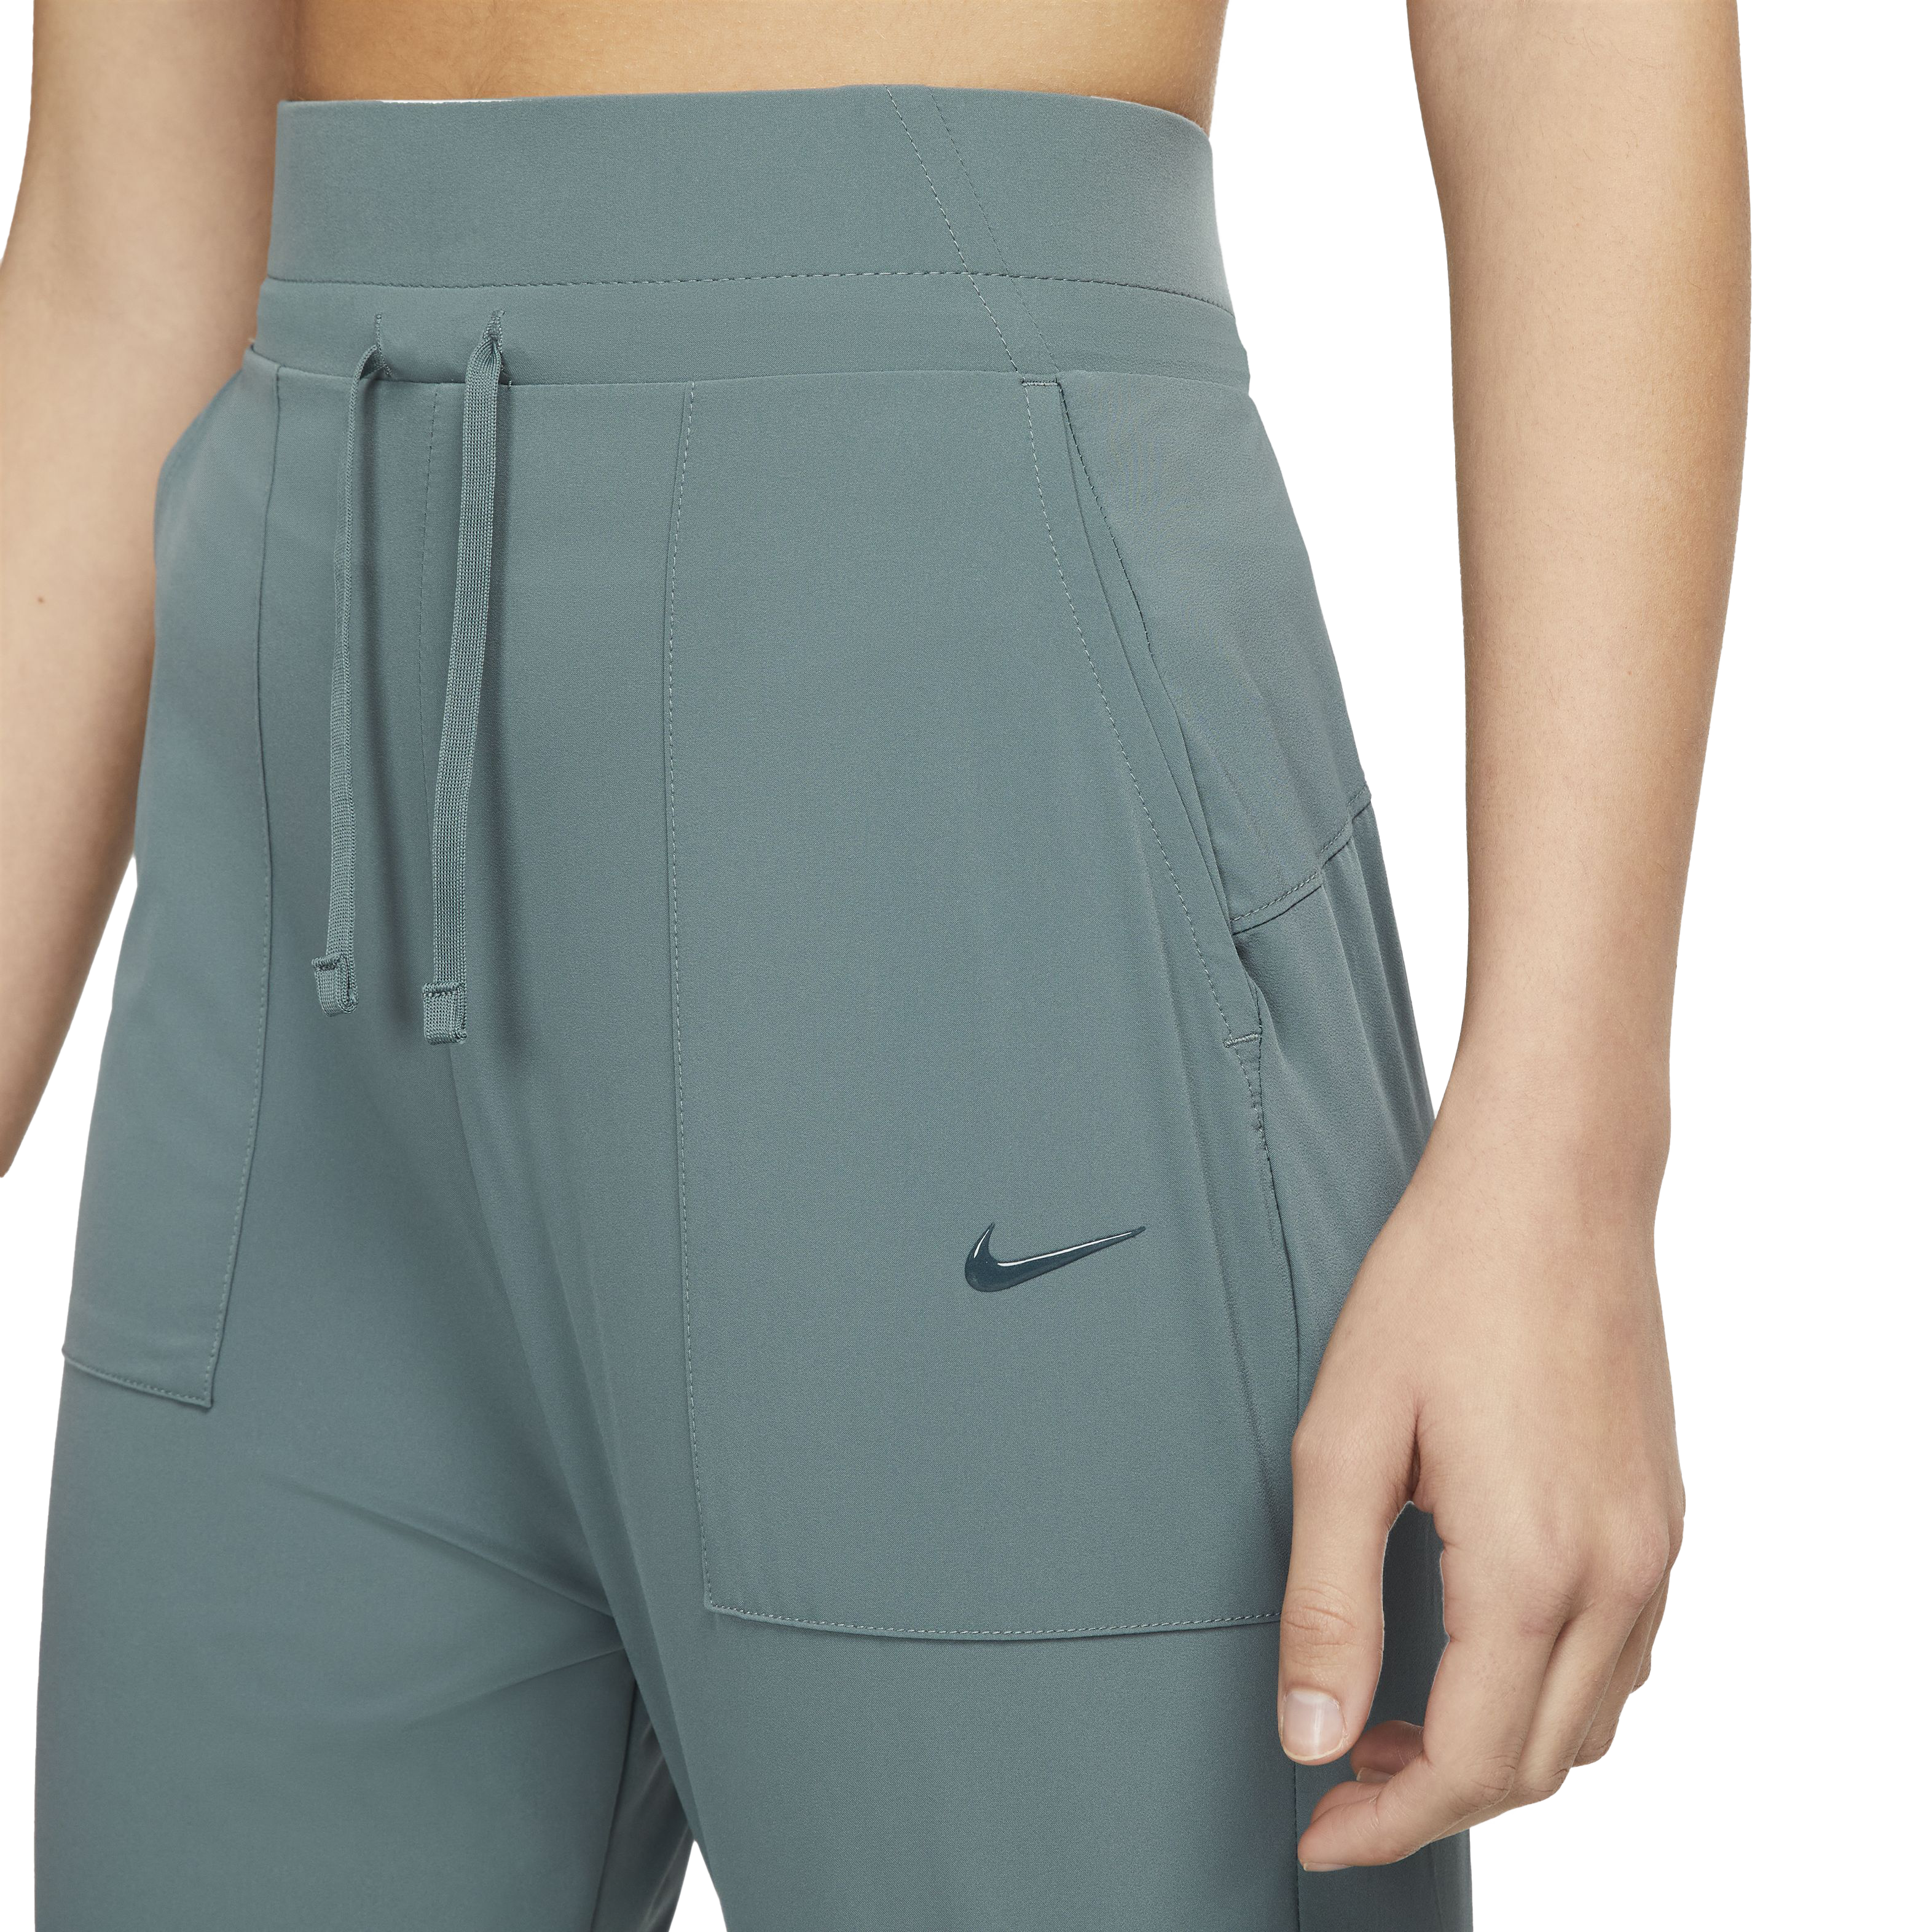 Nike Women'S Bliss Luxe 7/8 Training Pants (Medium) Navy Blue